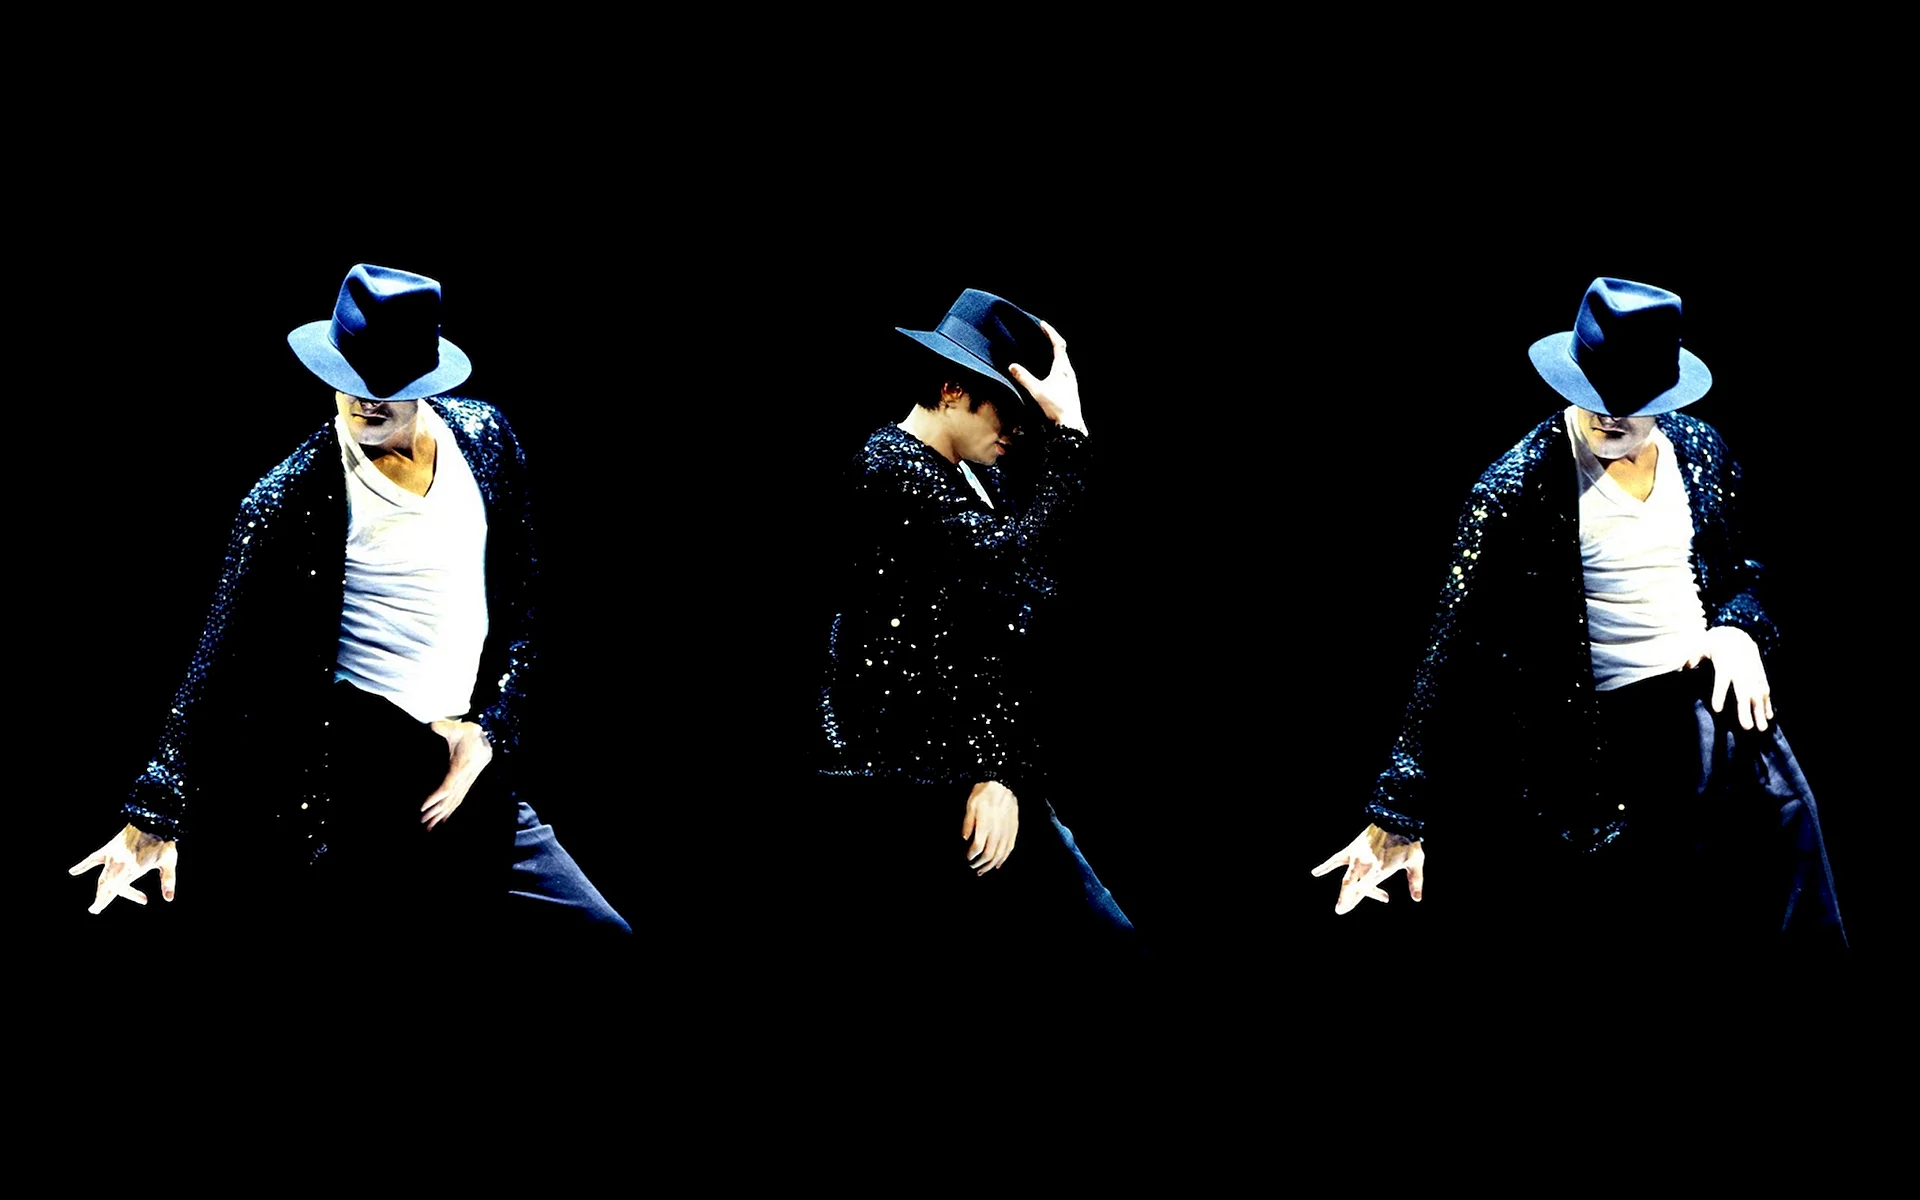 Michael Jackson Moonwalk Wallpaper